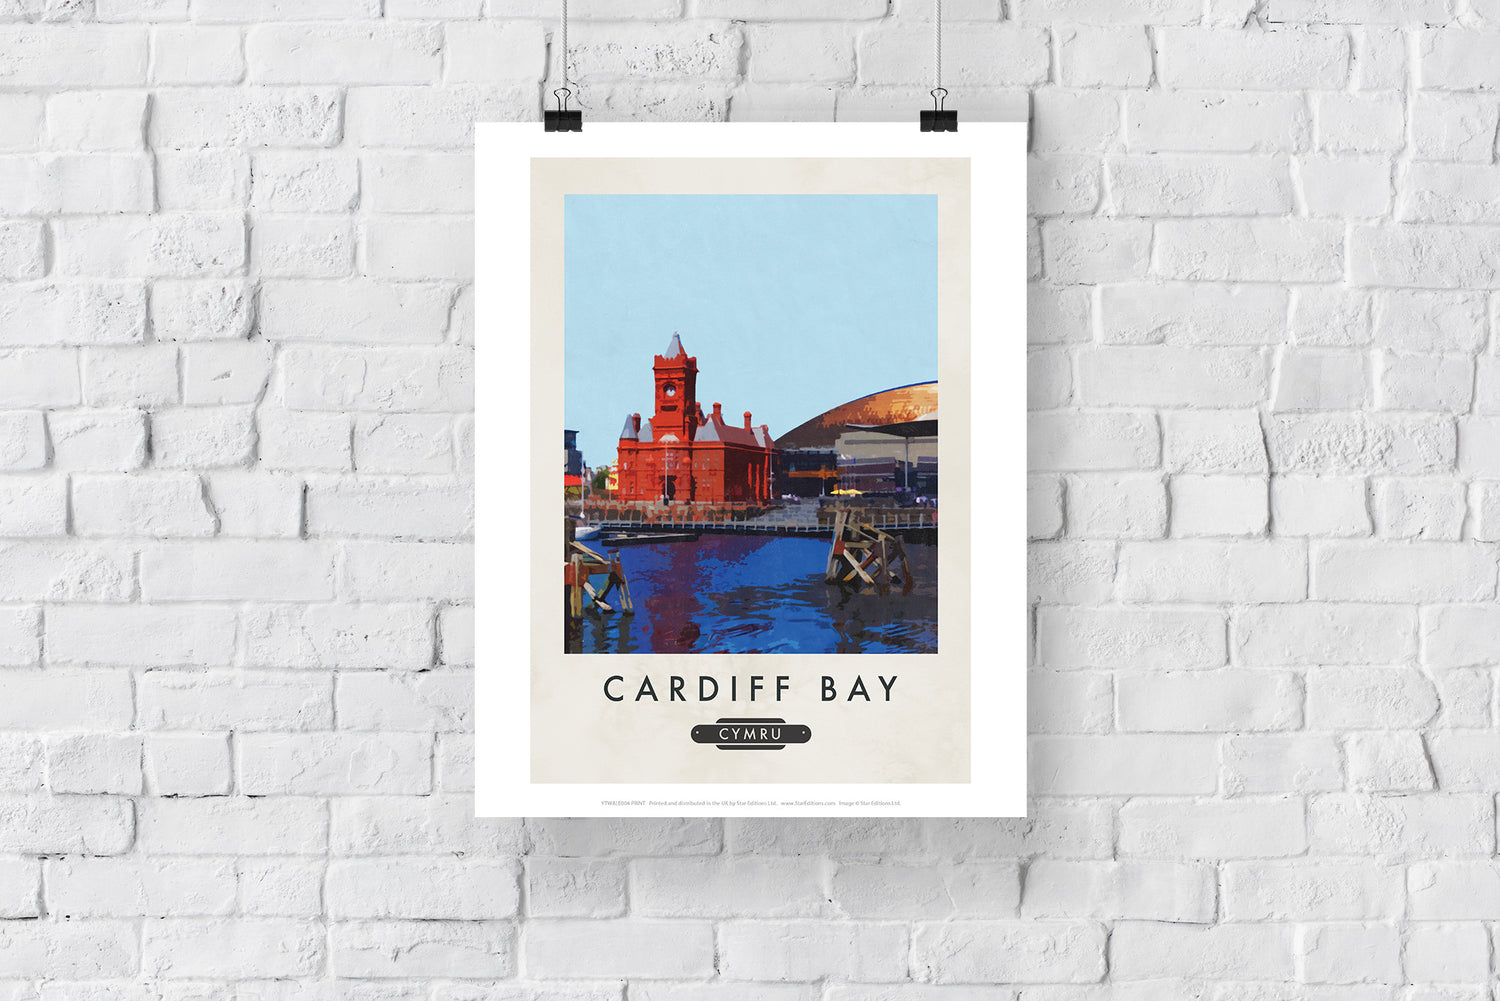 Cardiff Bay, Wales - Art Print